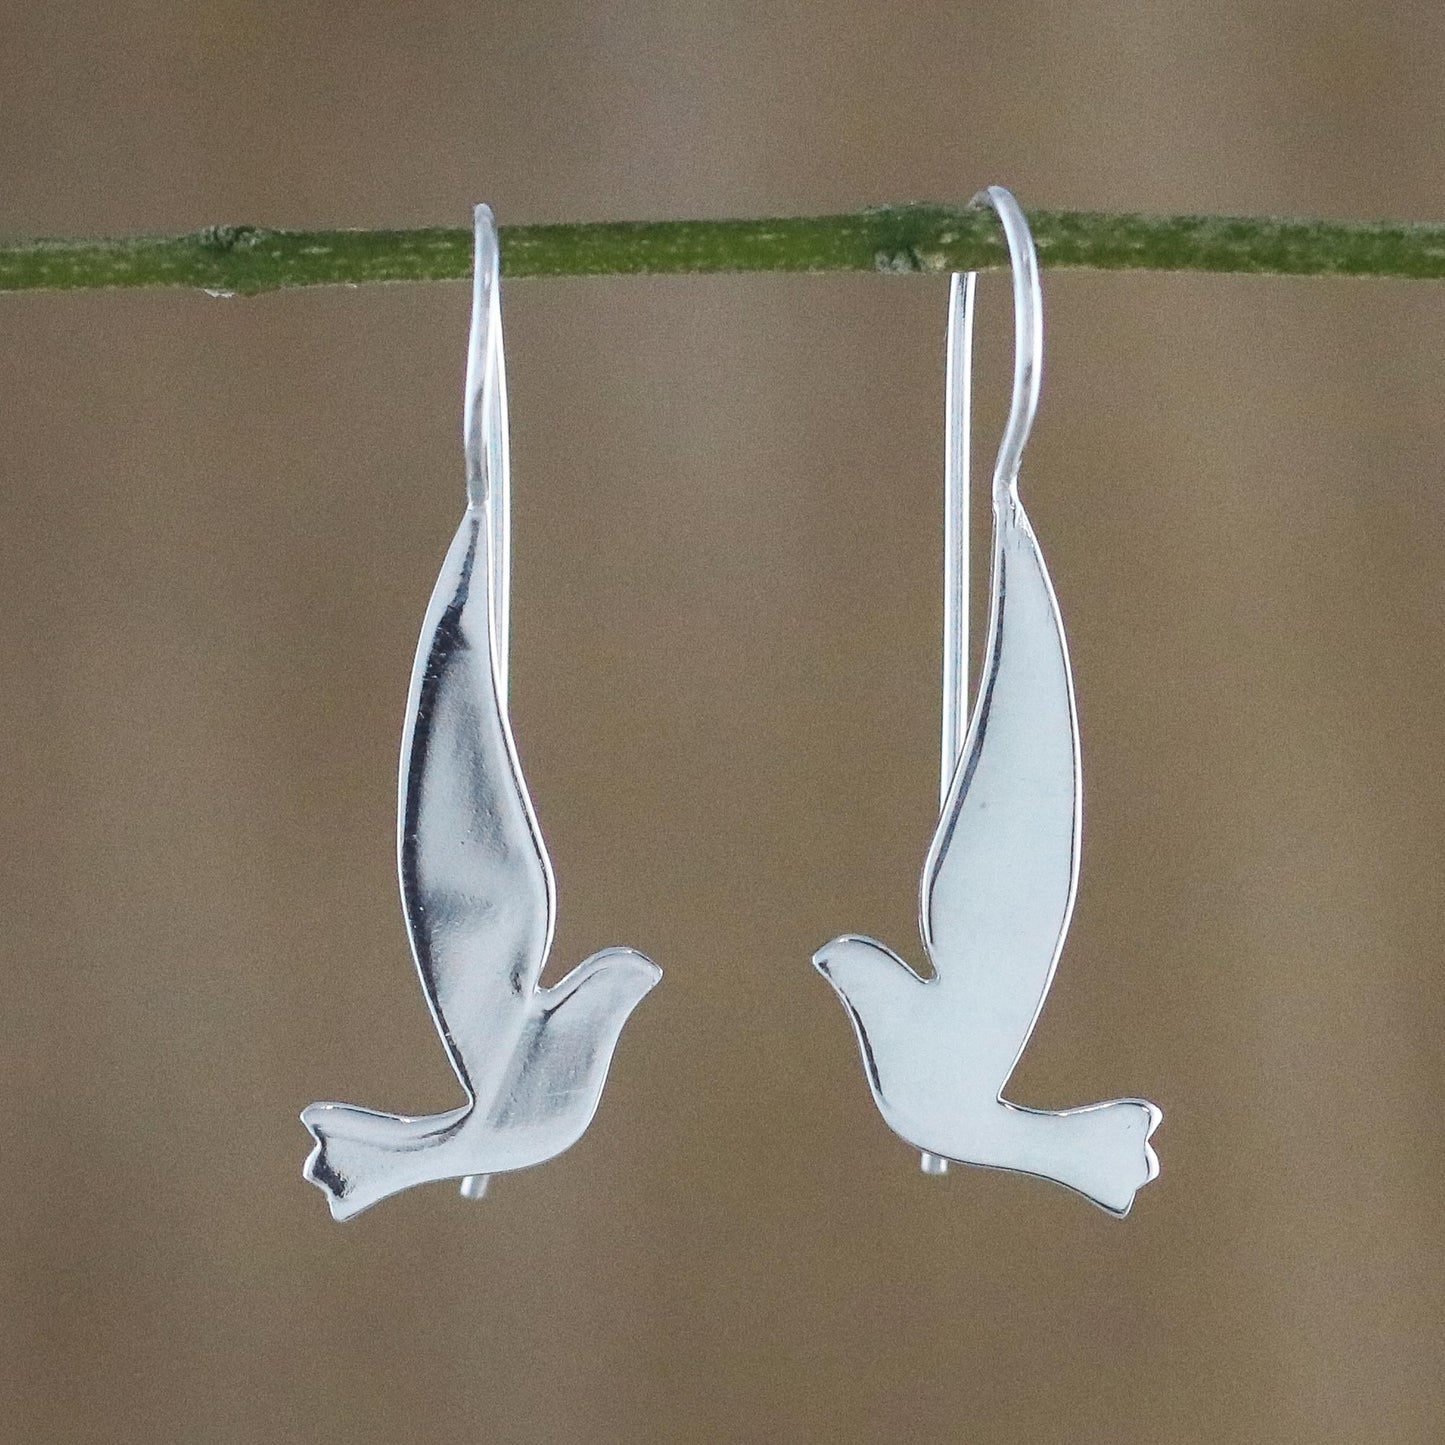 Friendly Doves Silver Satin Finish Hook Earrings